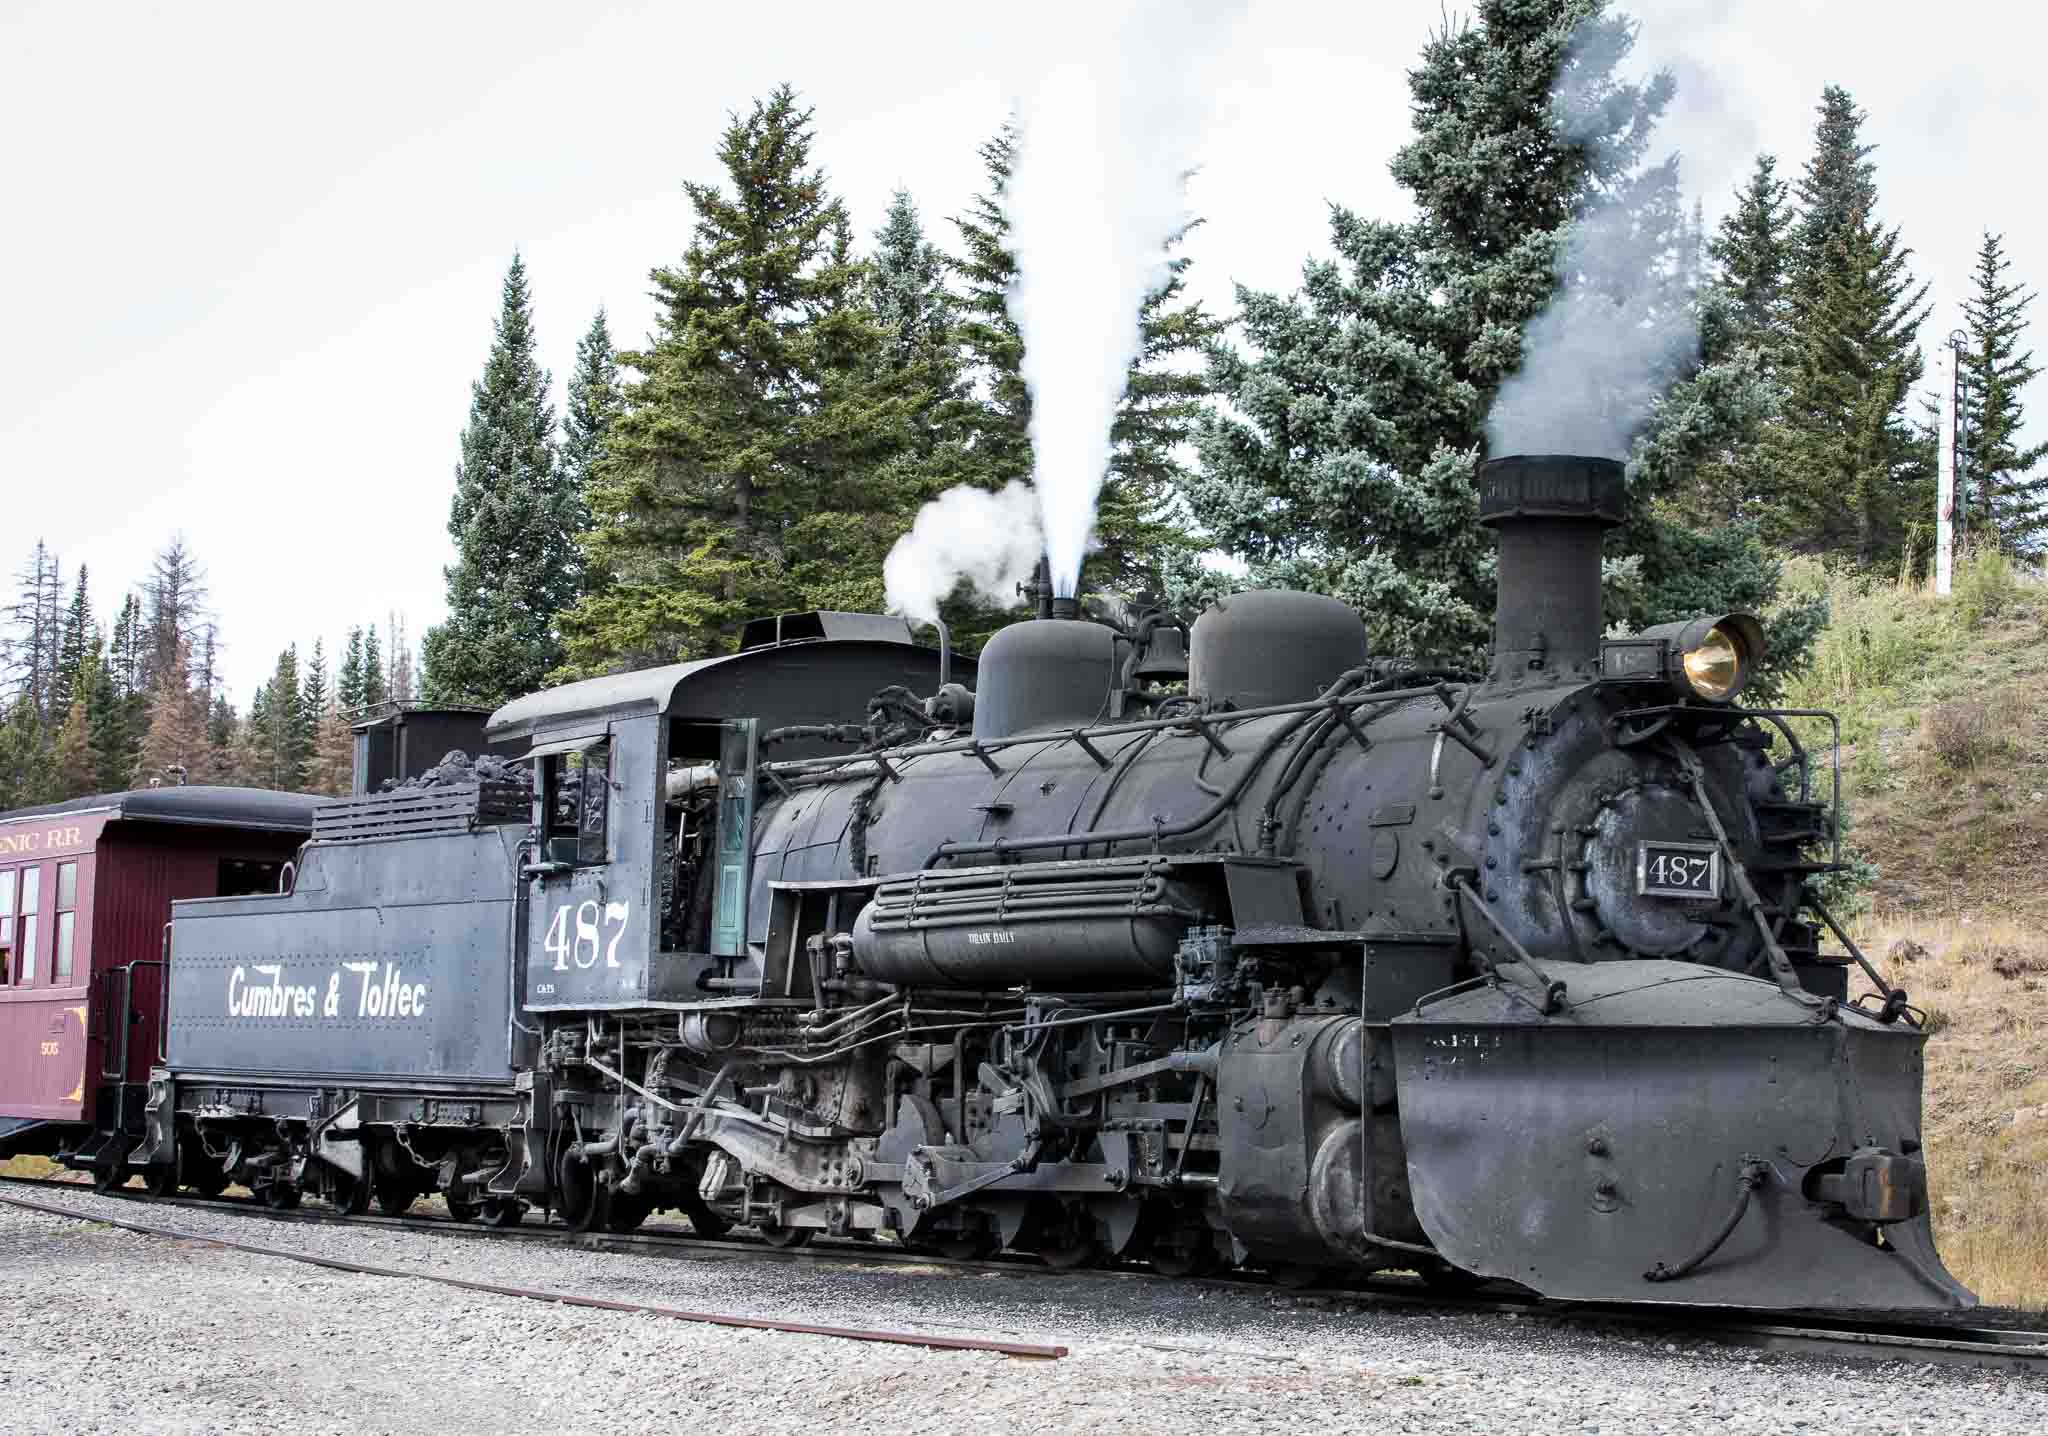 Cumbres & Toltec engine letting off steam at top of Cumbres Pass, October 8, 2014